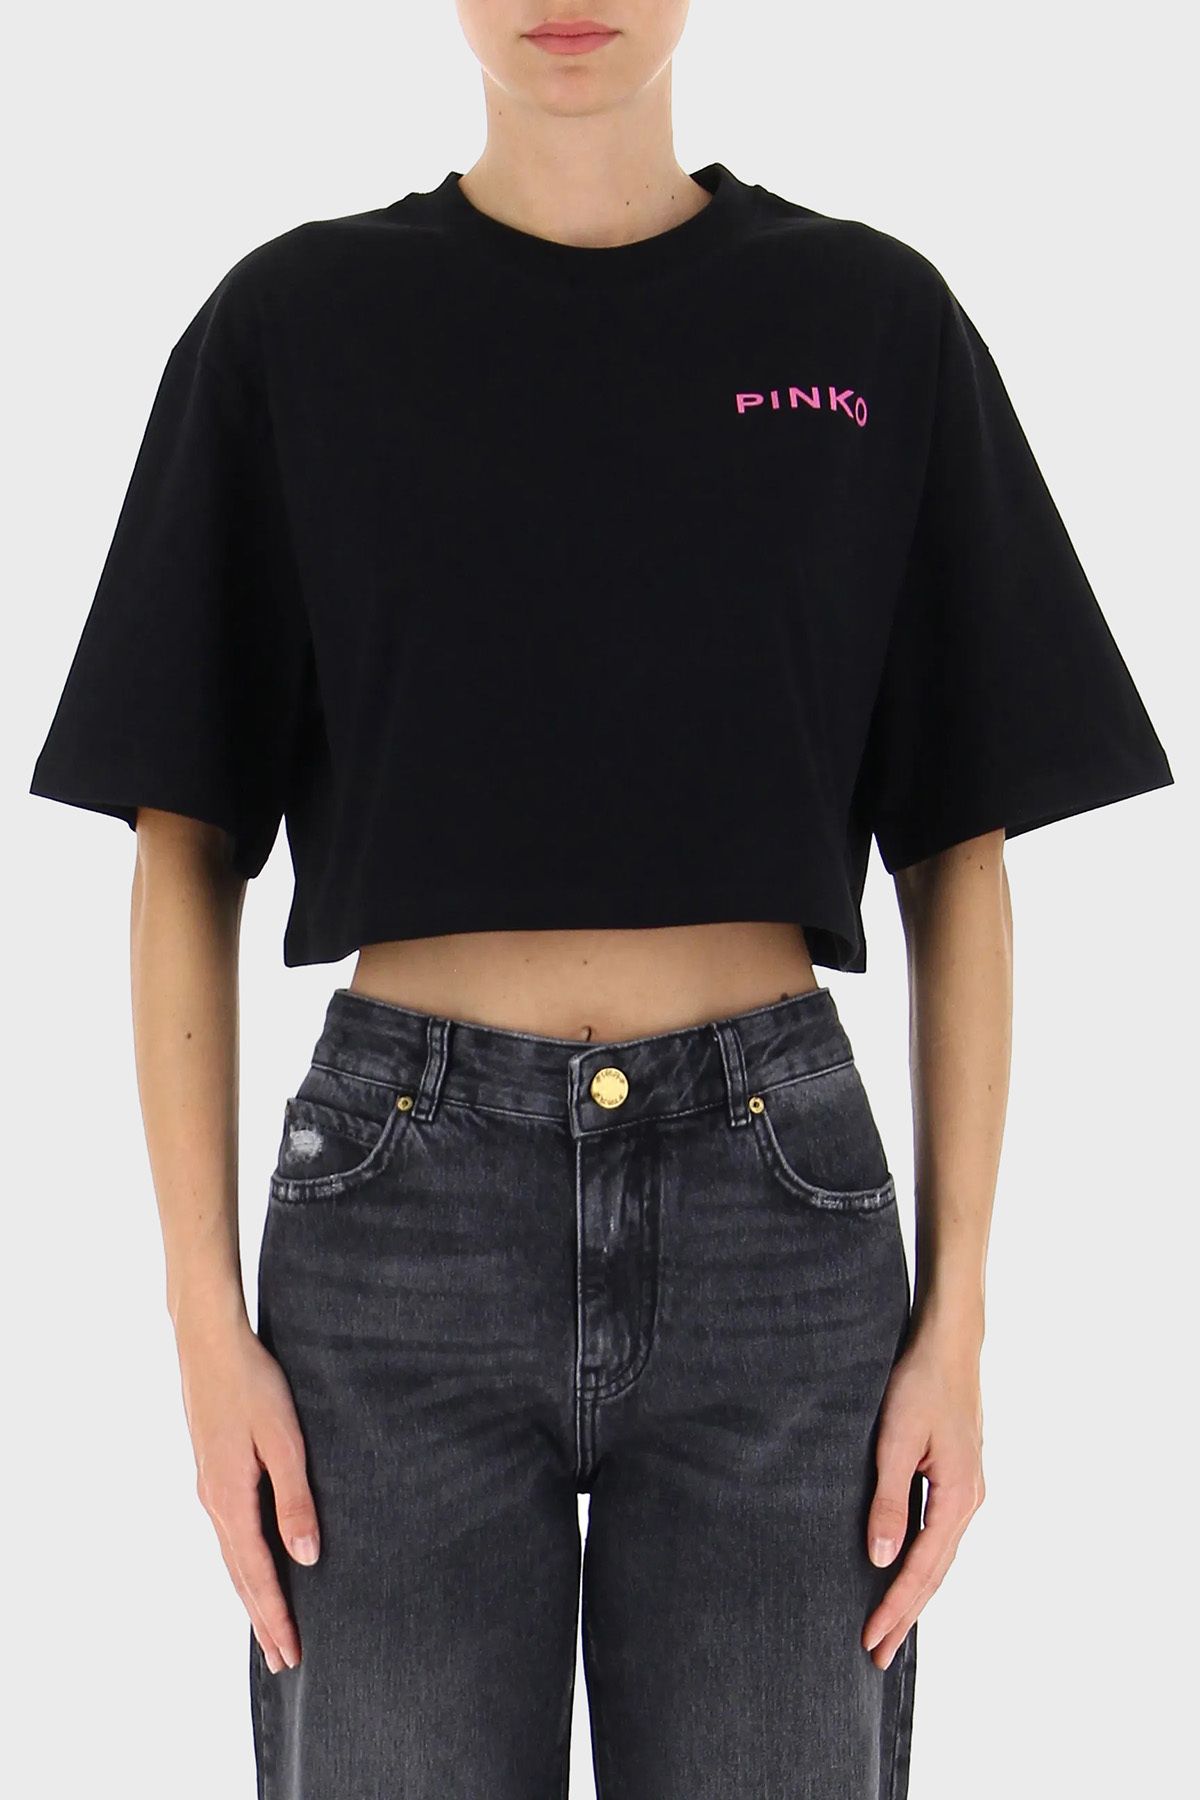 PİNKO Pinko % 100 Pamuk Logo Baskılı Hafif Oversize Top T Shirt T SHİRT 101768 A13K Z99